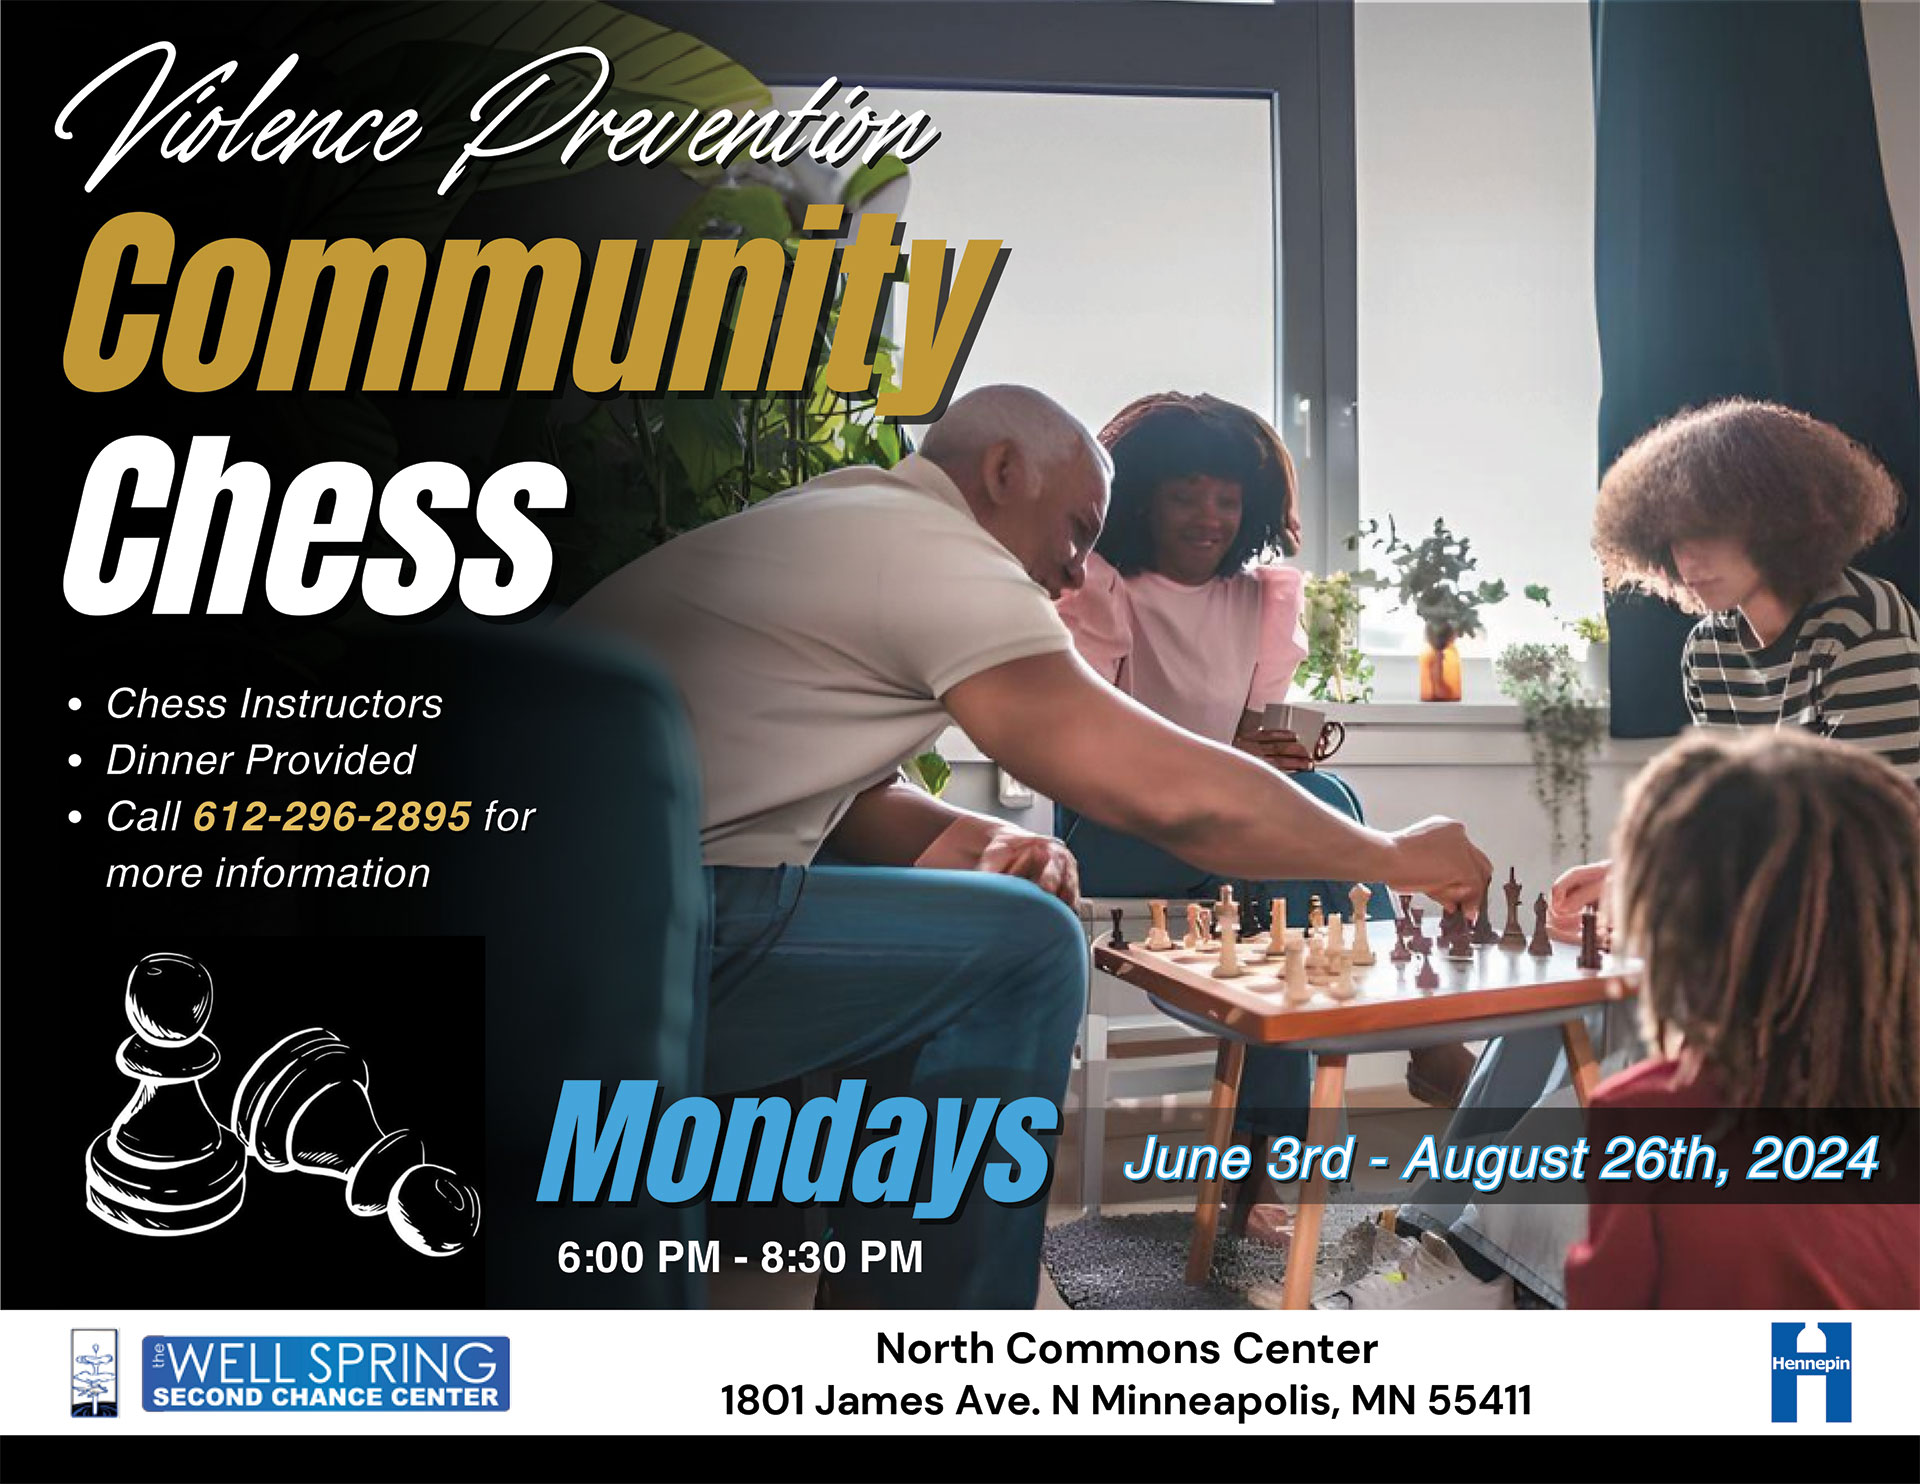 Wellspring Violencee Prevention Community Chess on Mondays